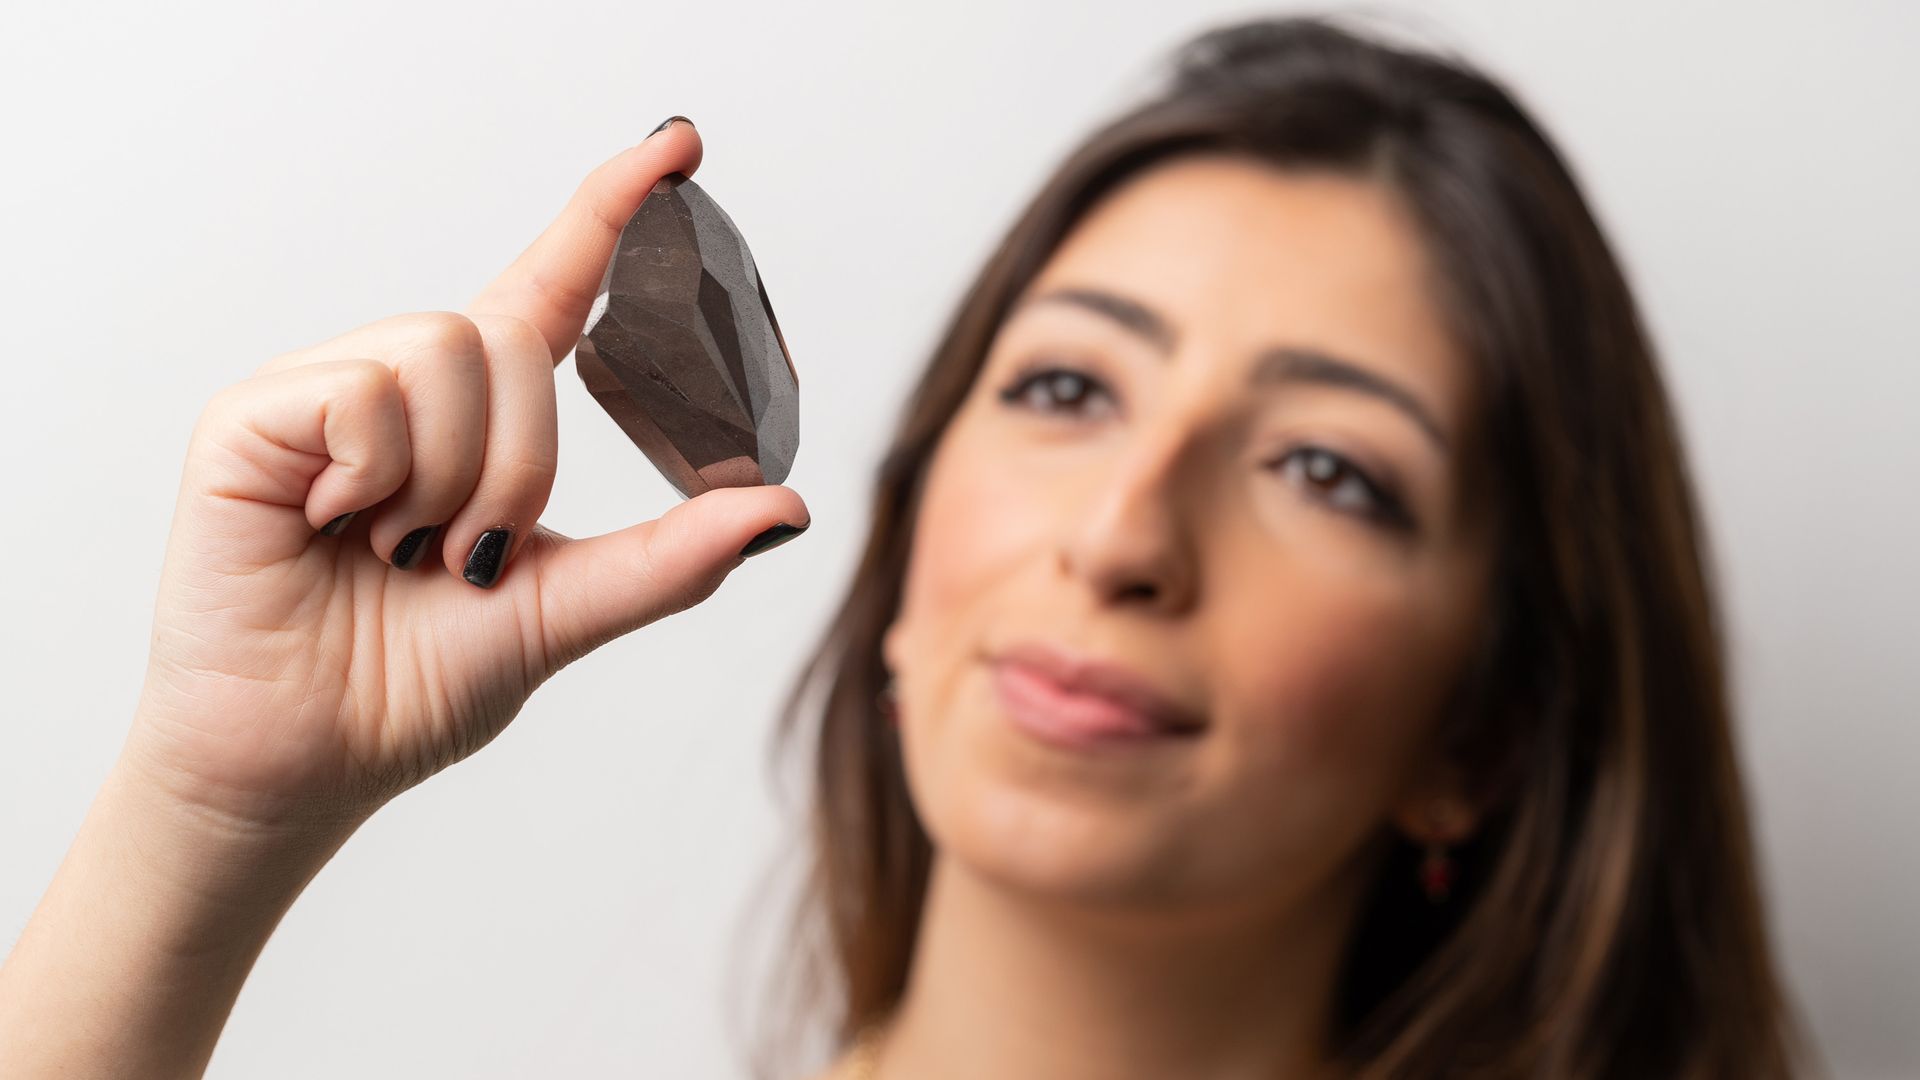 A woman holds a shiny black rock.